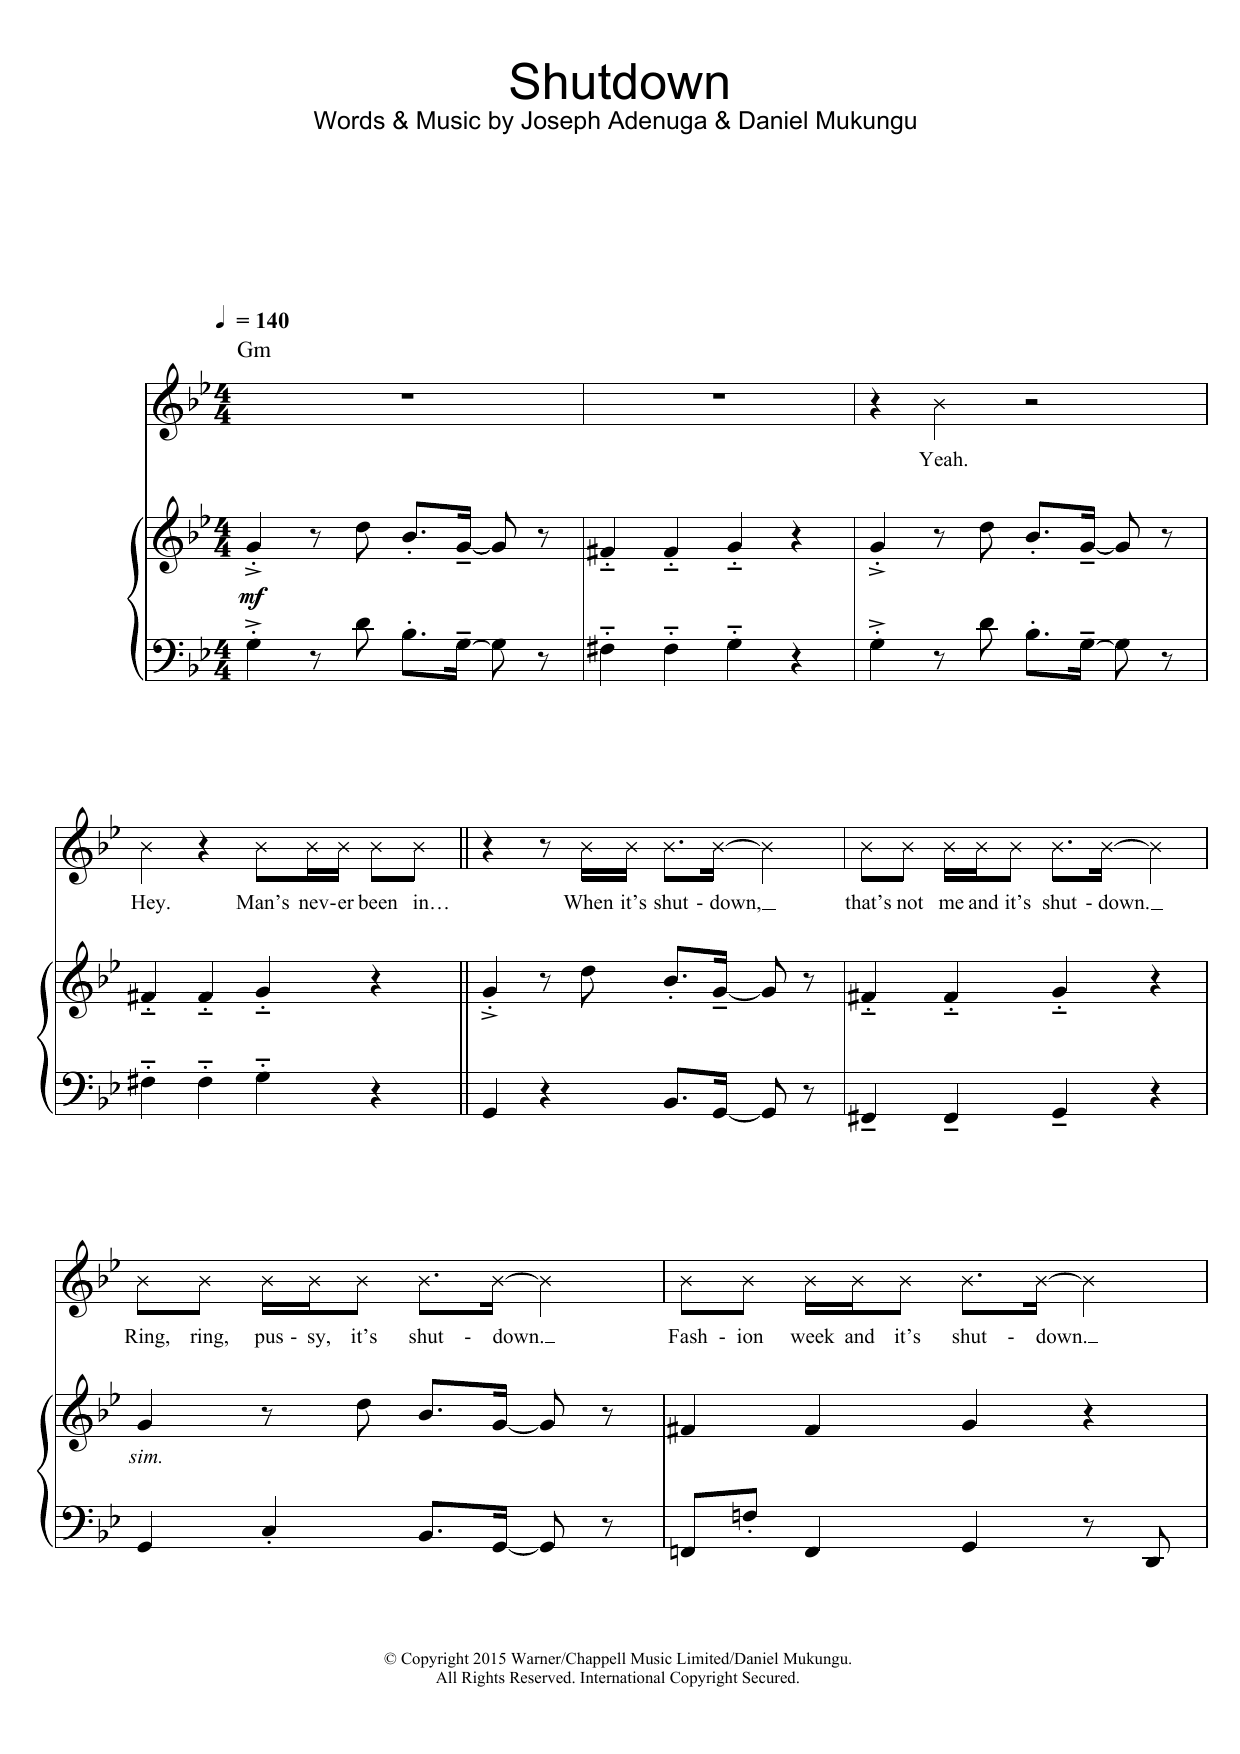 Skepta Shutdown Sheet Music Notes & Chords for Piano, Vocal & Guitar - Download or Print PDF